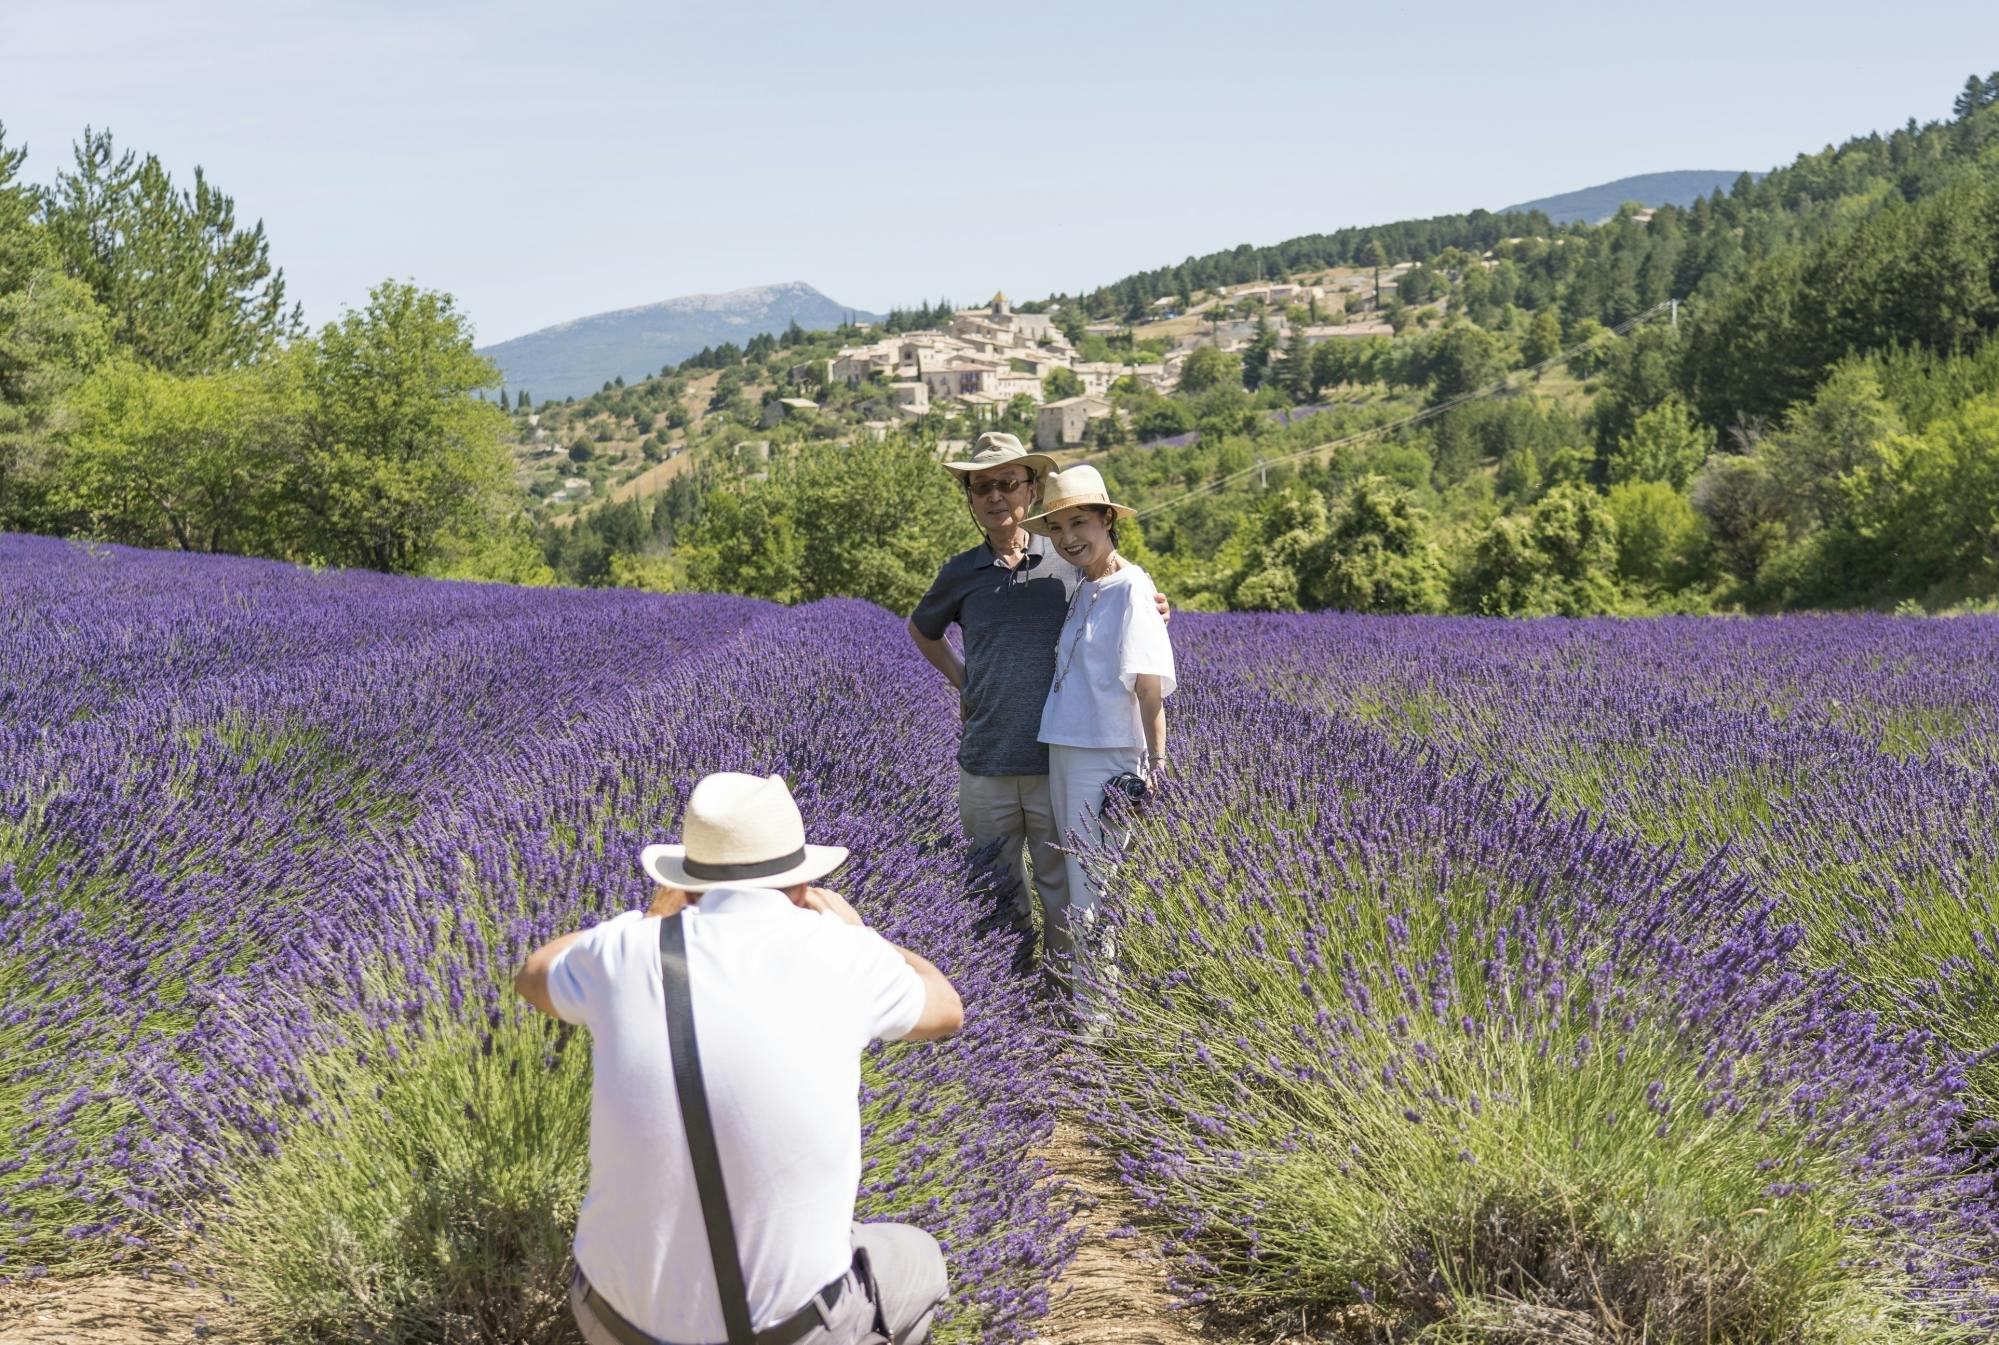 Lavendel in Sault en rondleiding door Gordes en Roussillon